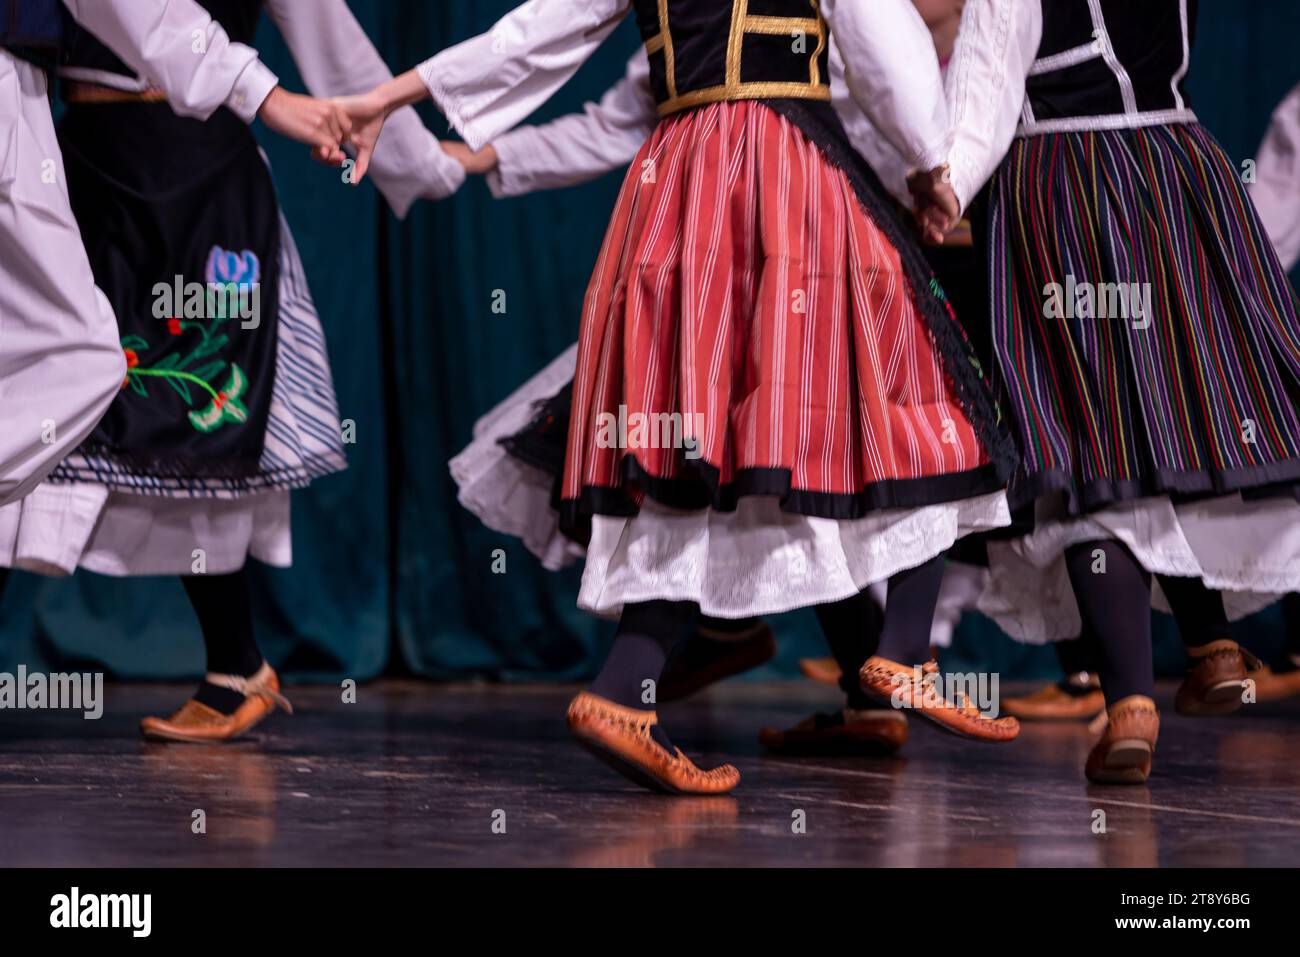 Serbian Orthodox folk costume, folklore and folk dances Stock Photo